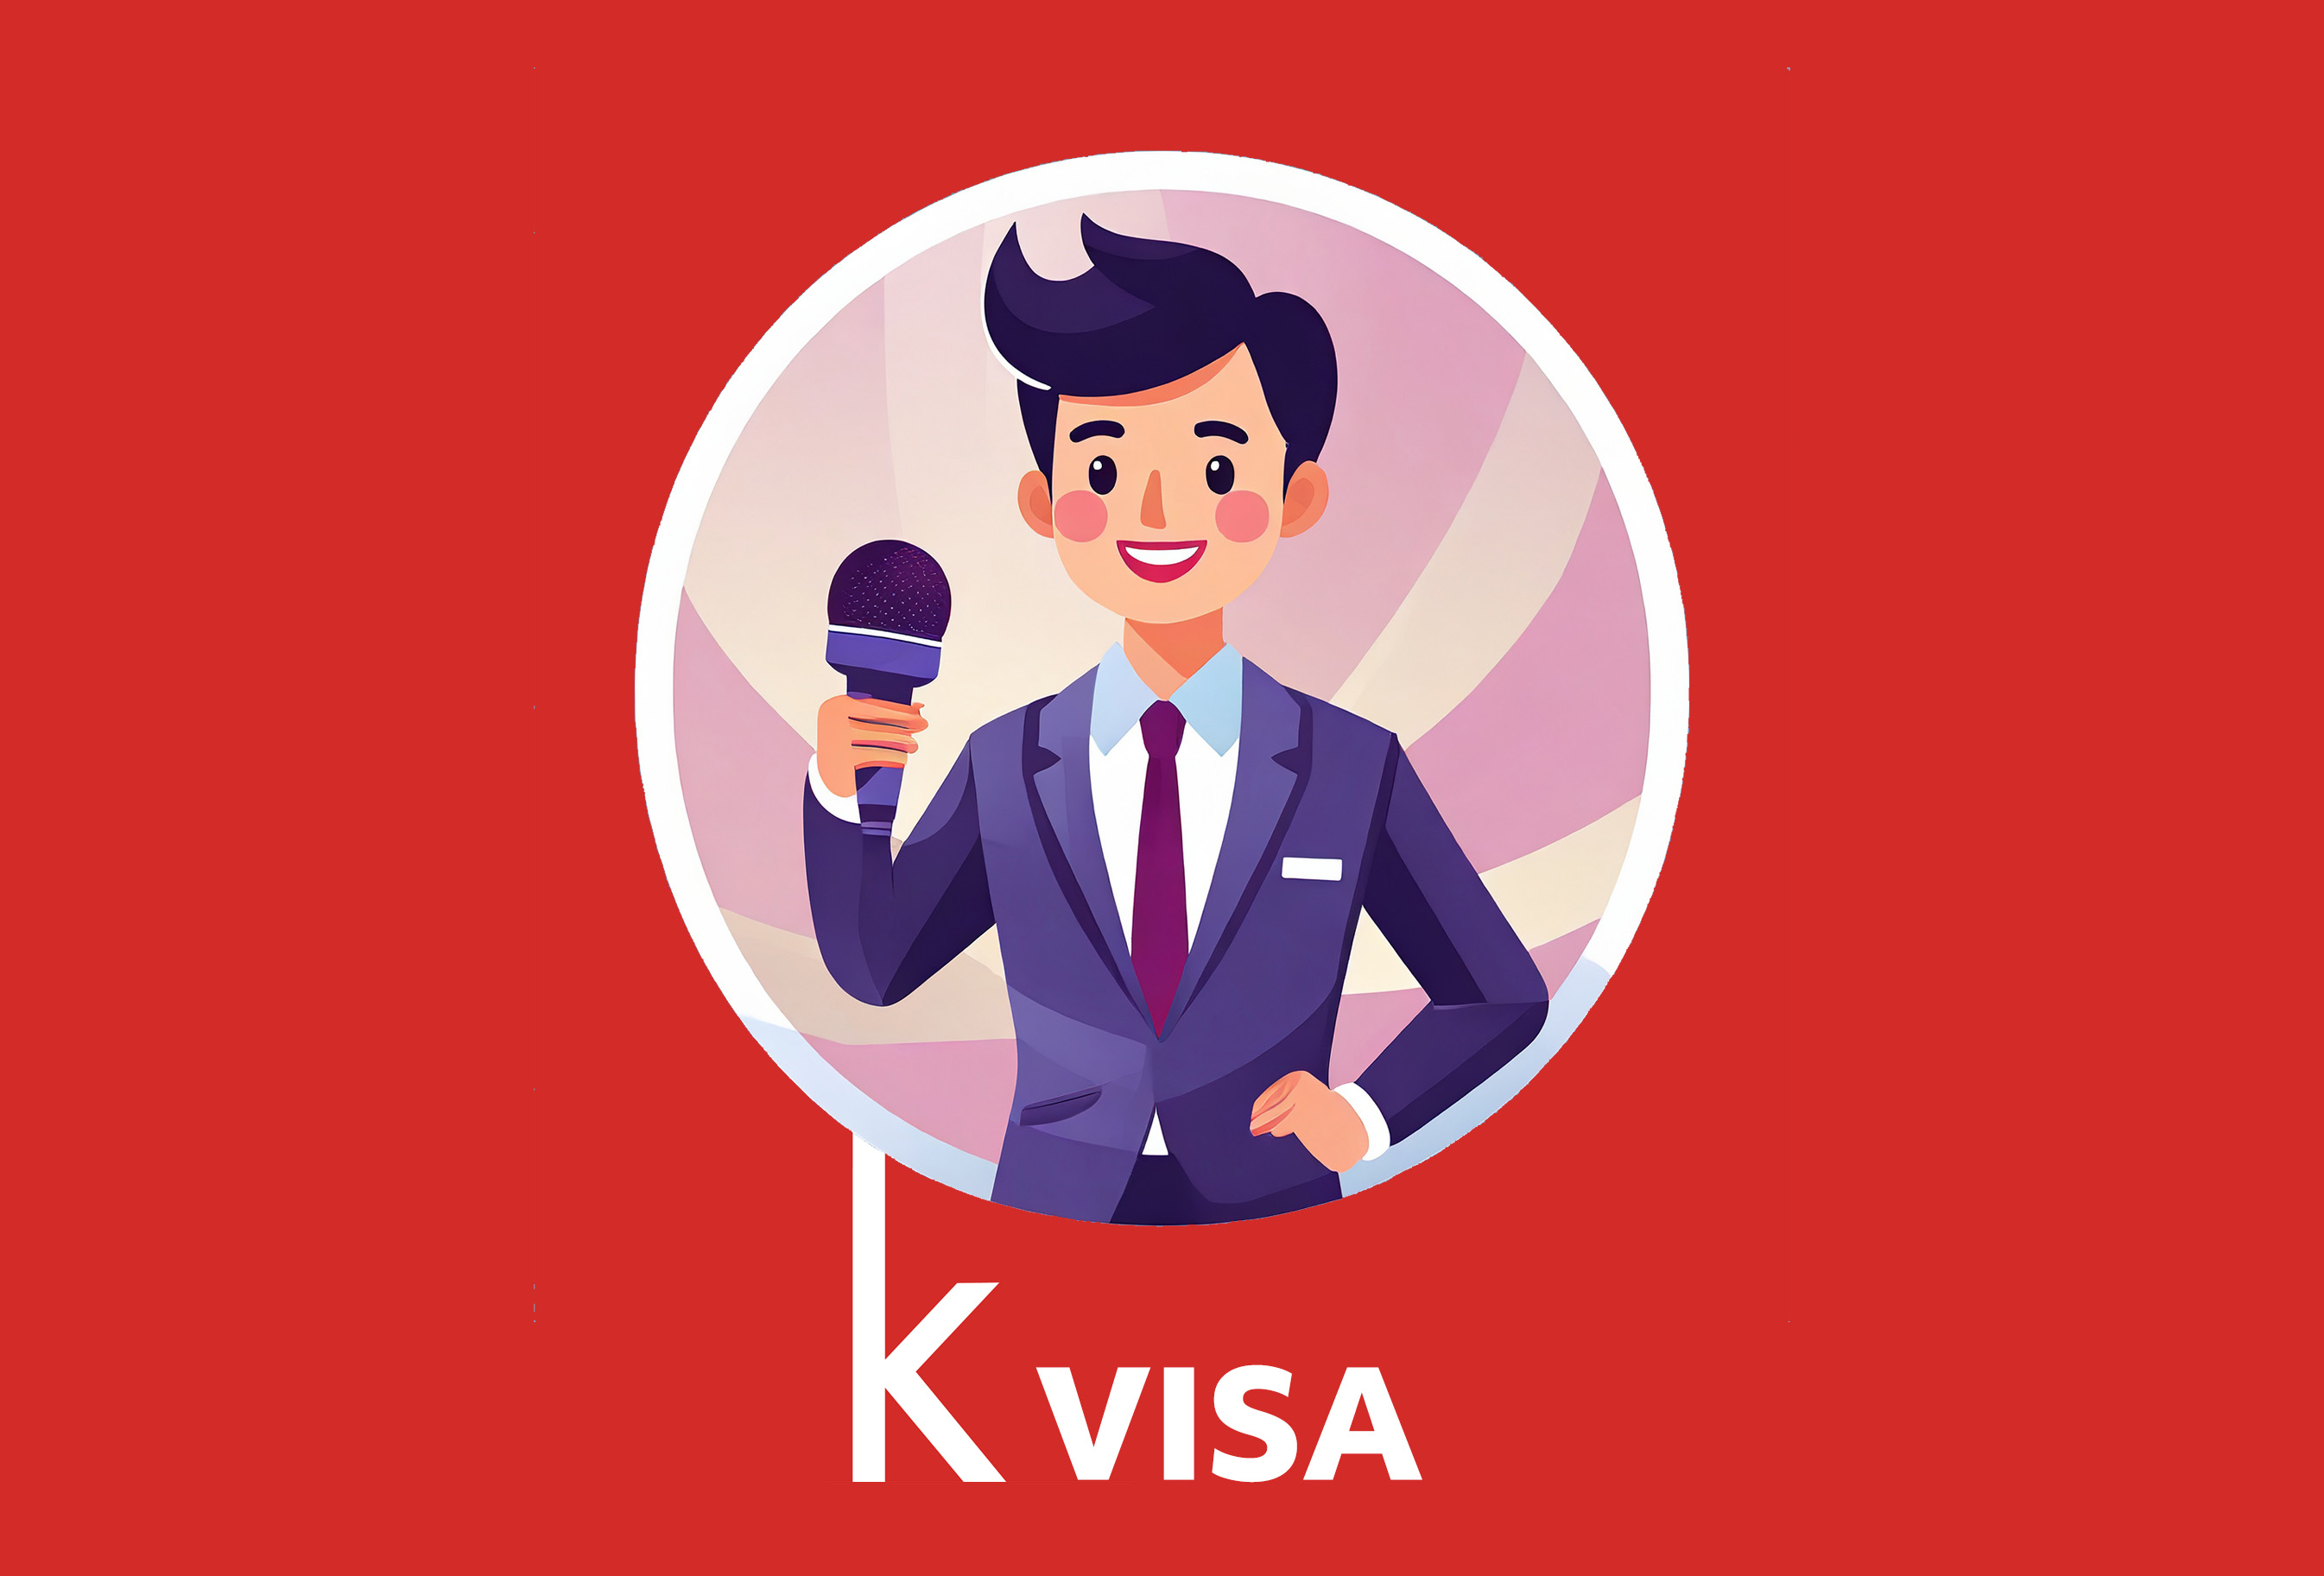 C-4 Visa profile.jpg